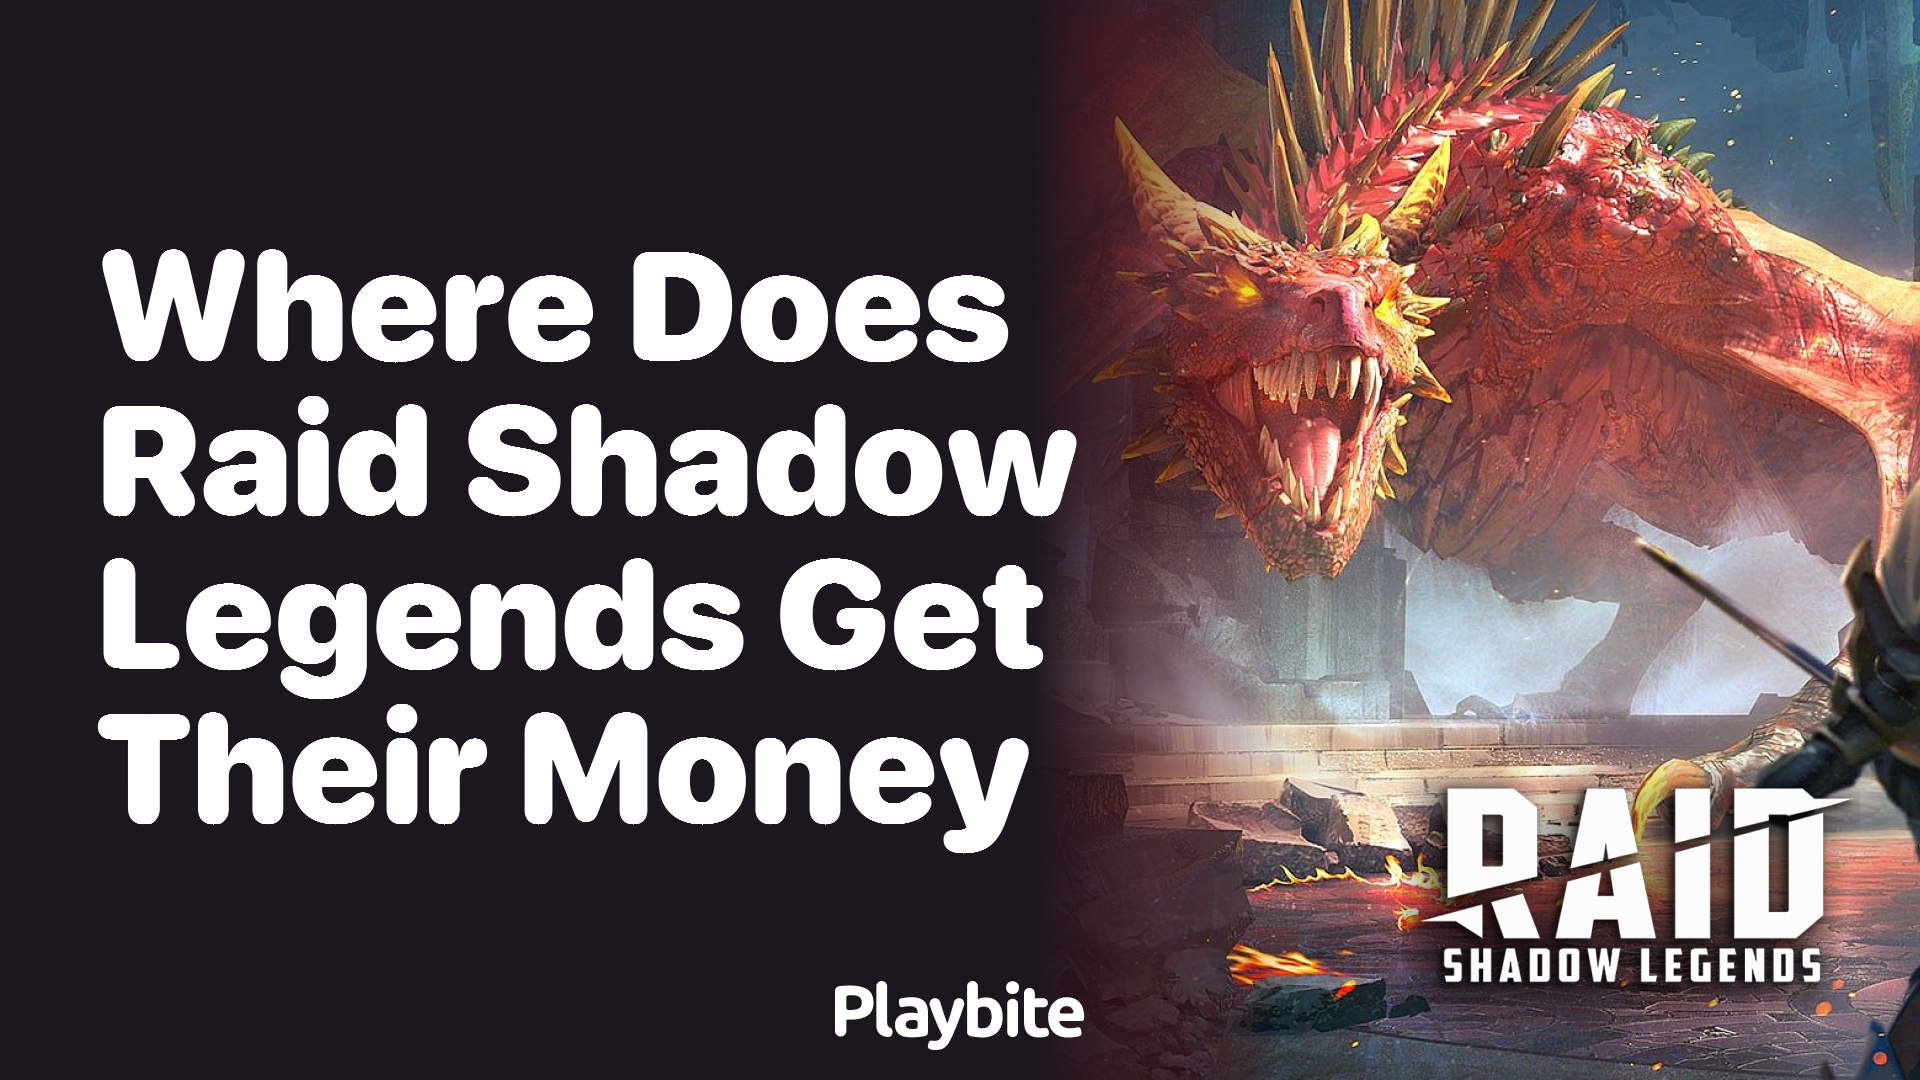 Where does Raid Shadow Legends get their money?